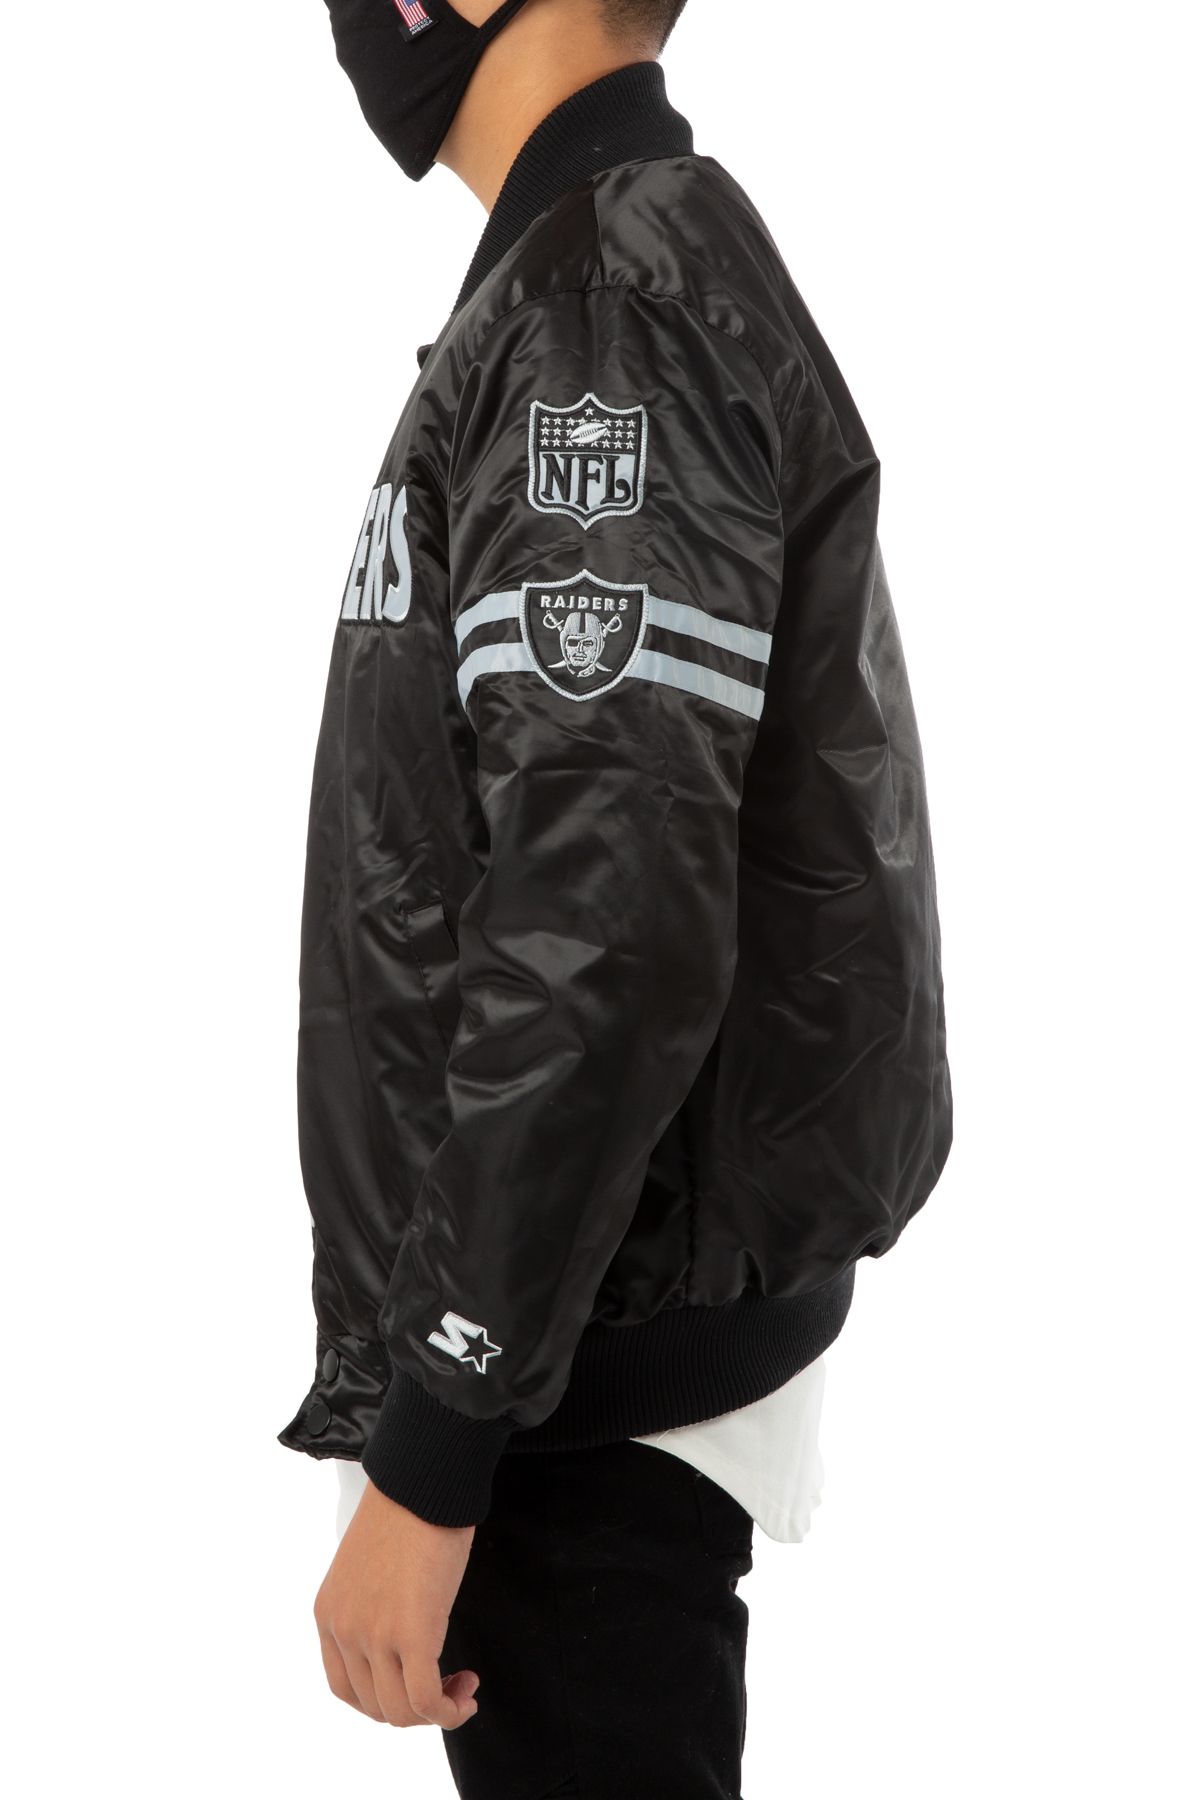 Las Vegas Raiders Men's Franchise Jacket